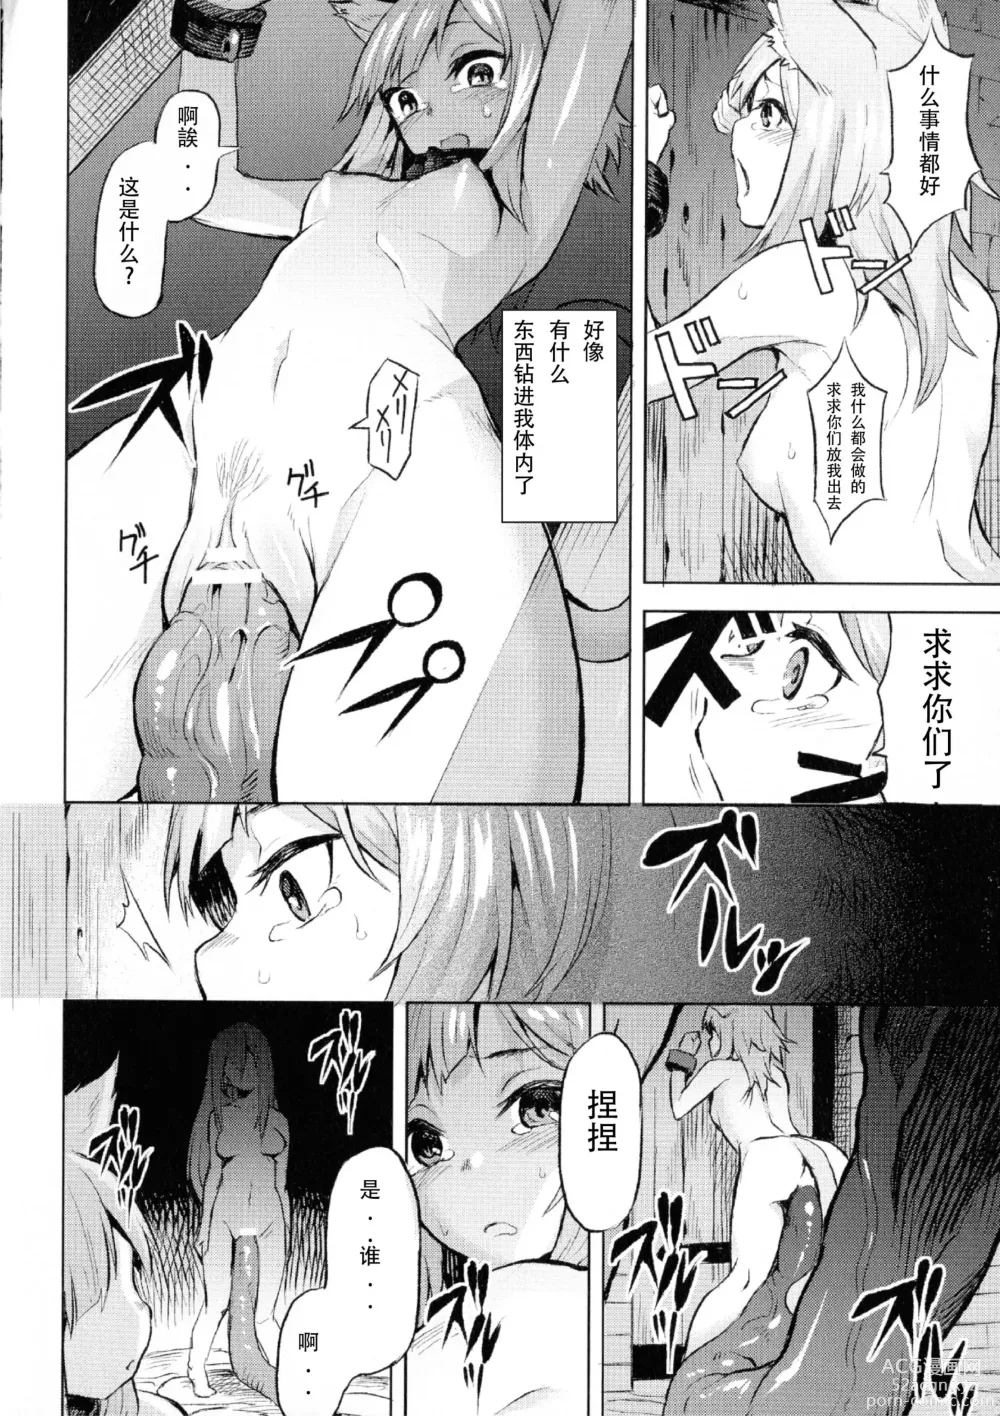 Page 175 of manga Ishu Kitan